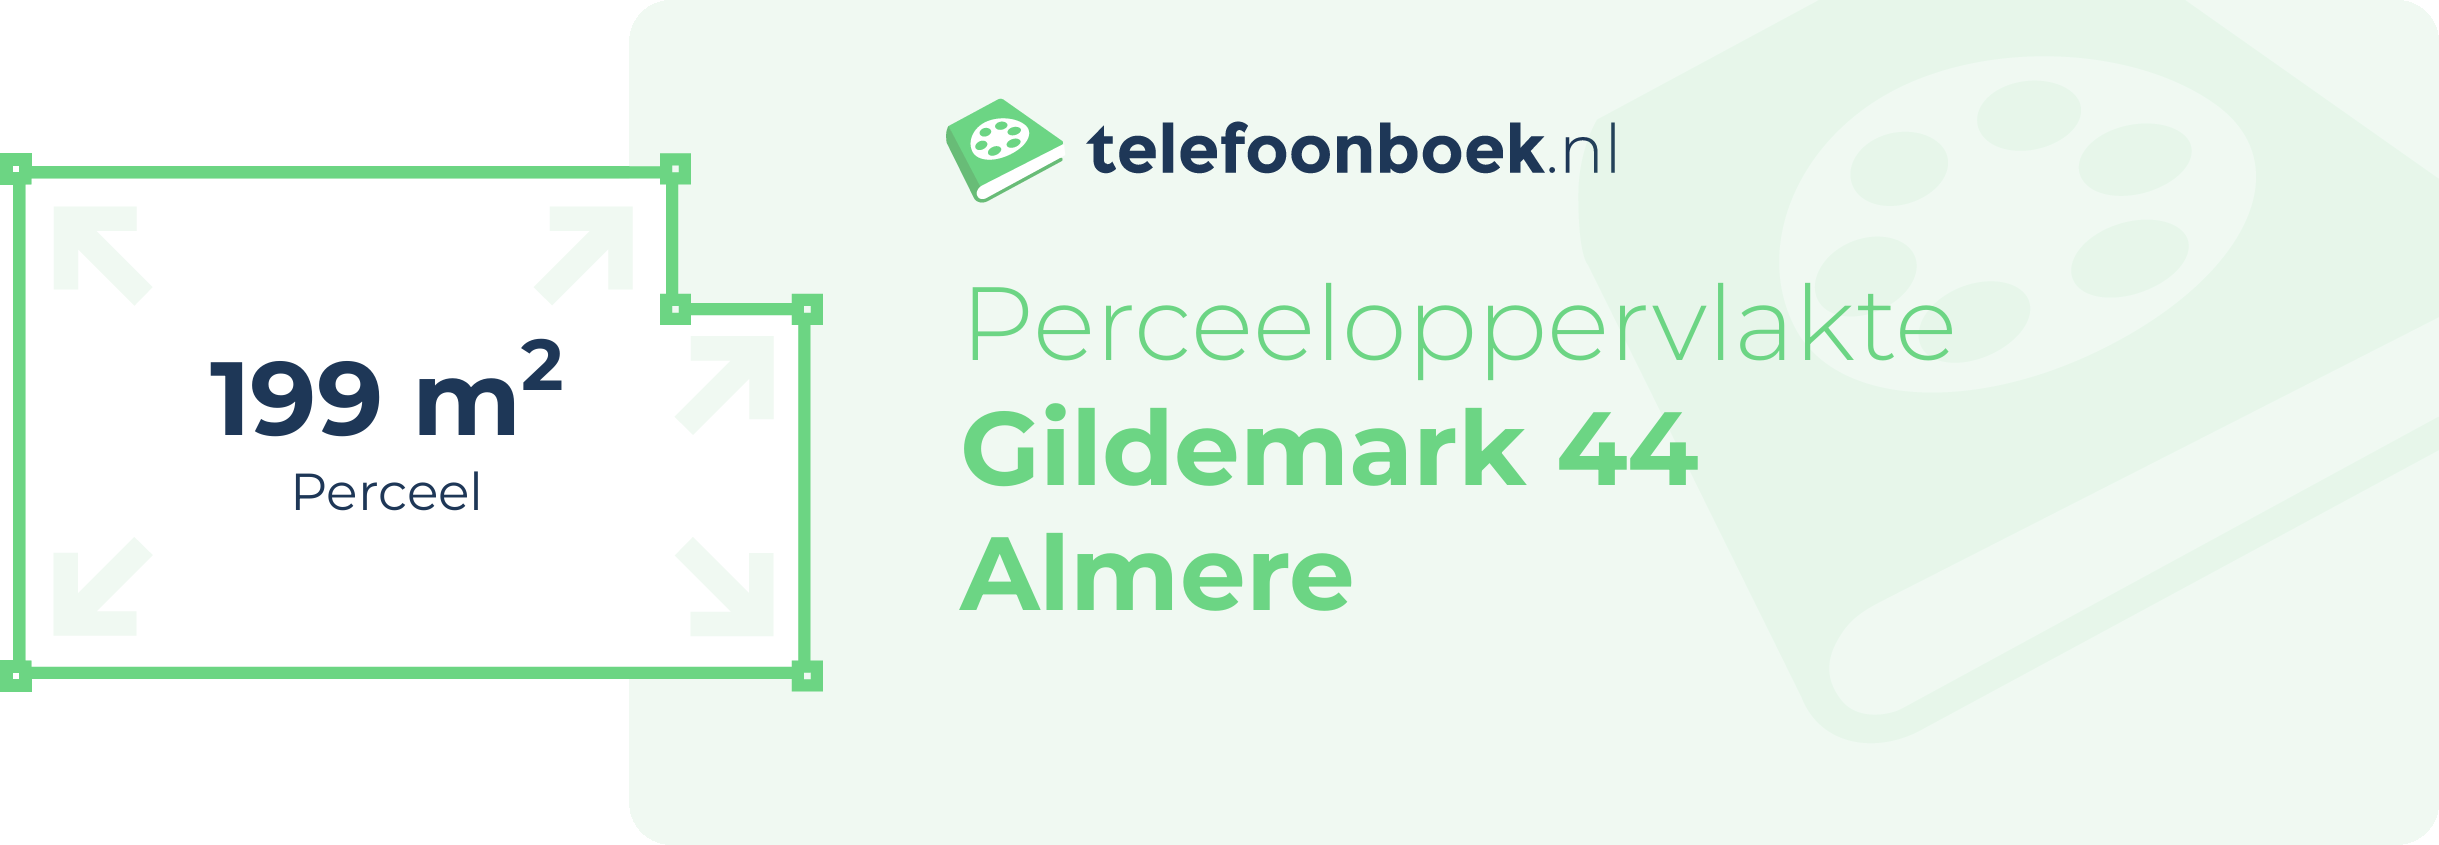 Perceeloppervlakte Gildemark 44 Almere